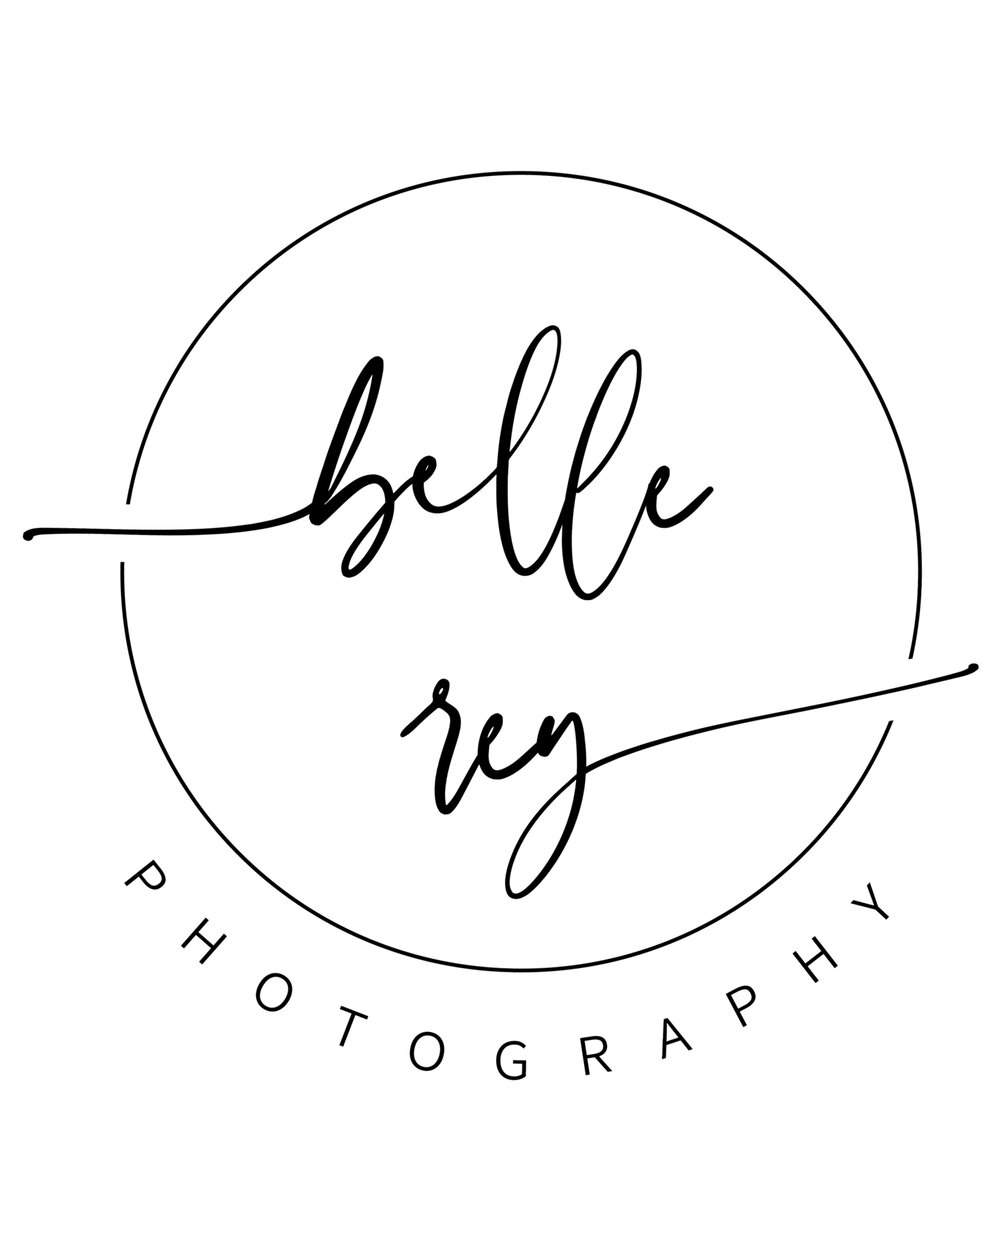 BelleRey Photography